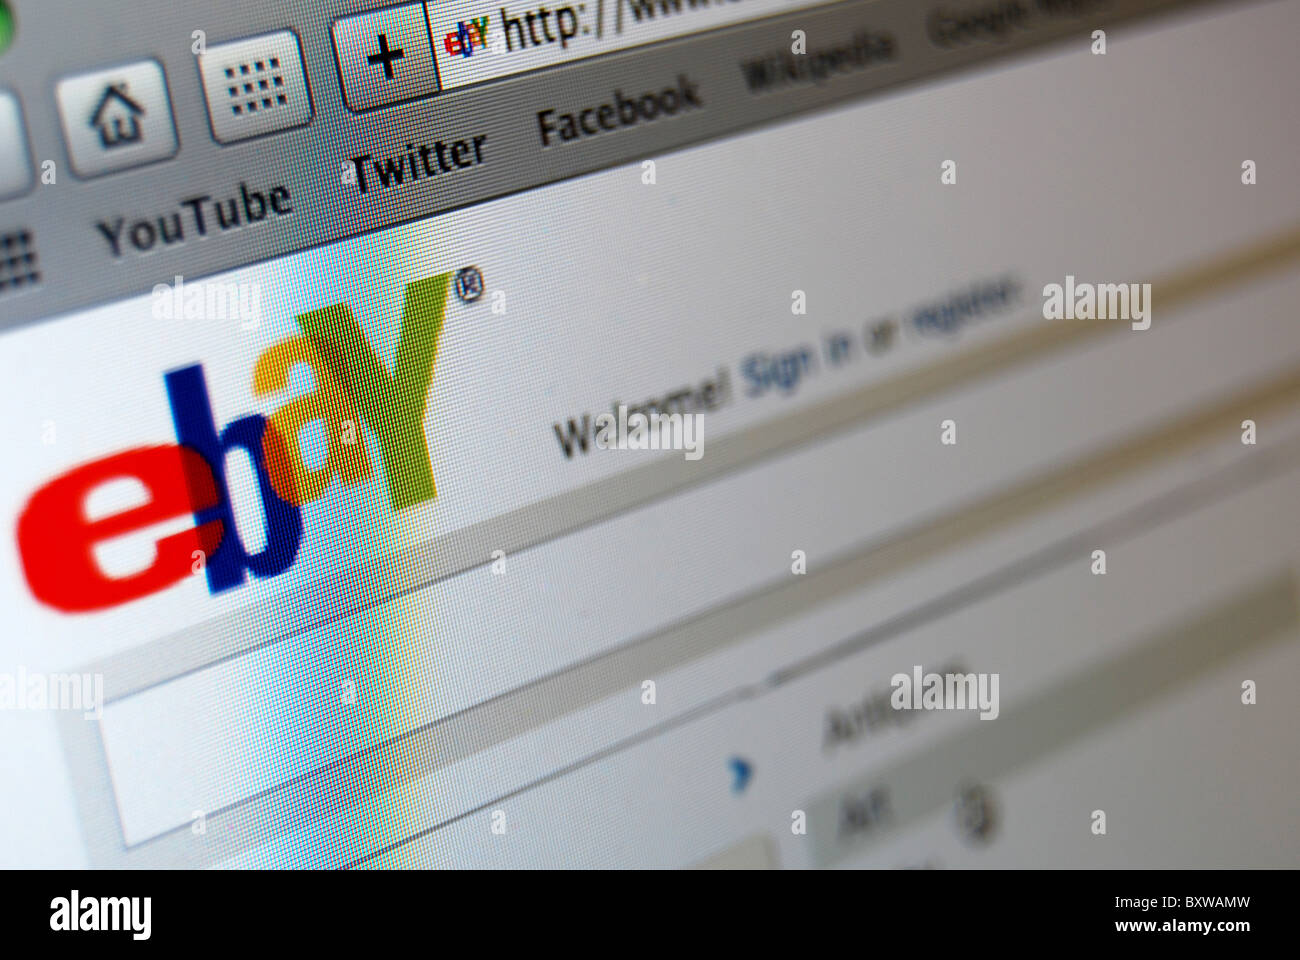 Photo Illustration of the ebay website 2011 Stock Photo